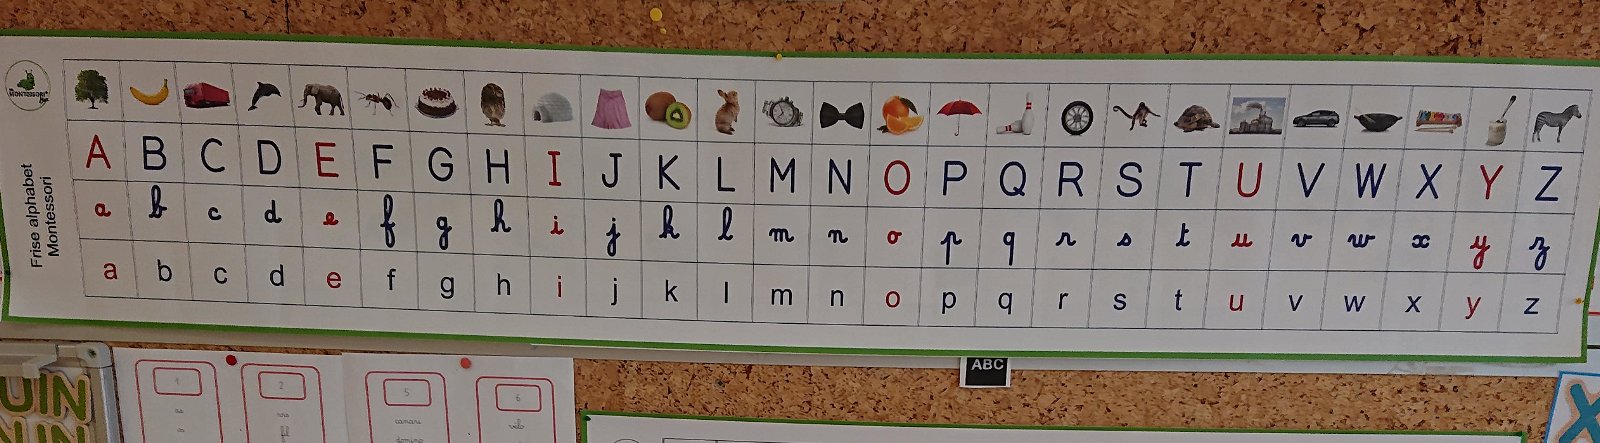 Mamontessoribox frise alphabet v2